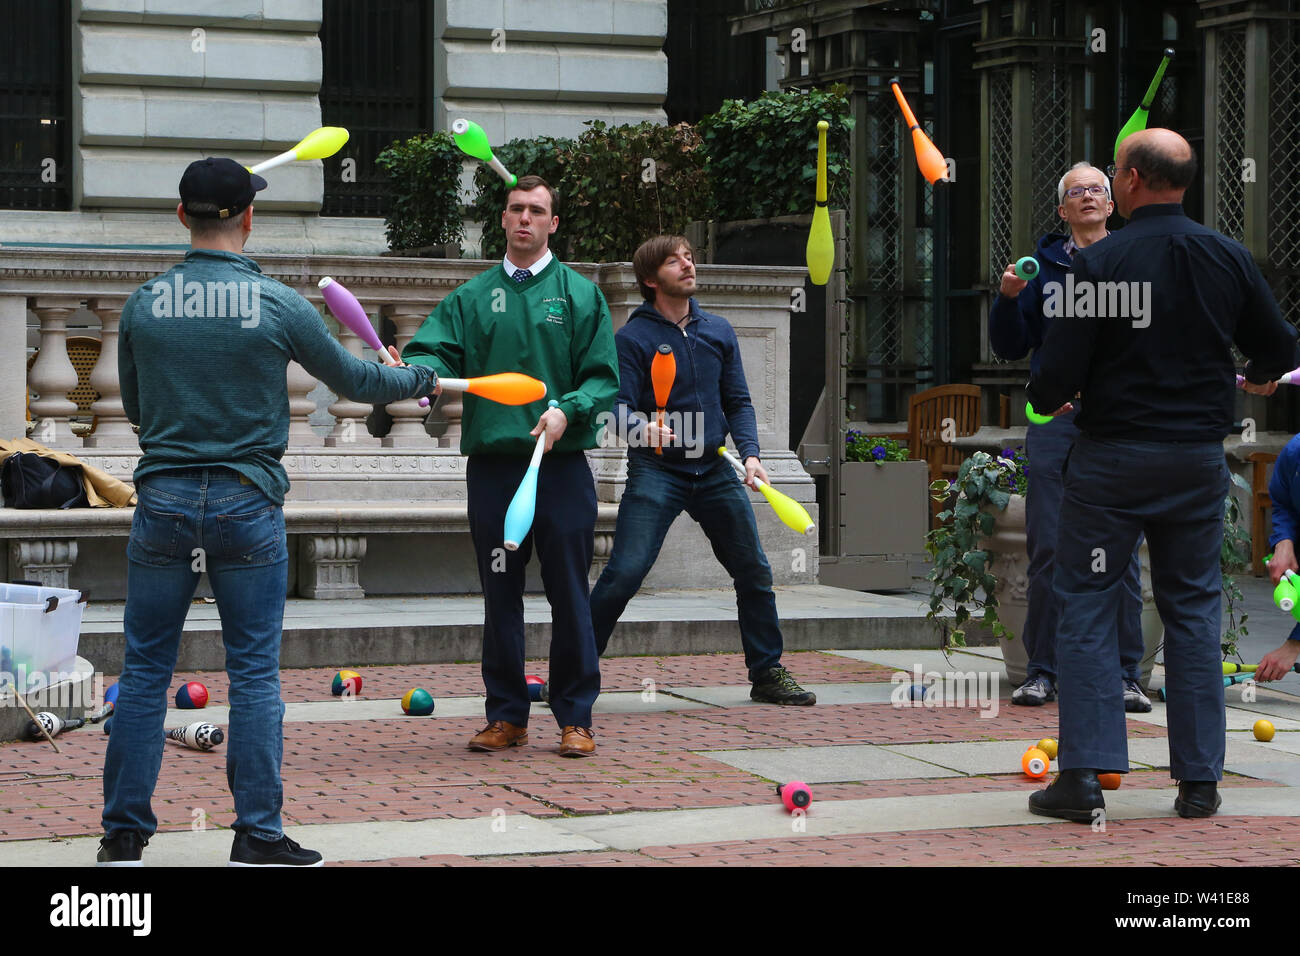 Amateur jugglers train in Bryant Park during lunch break Stock Photo